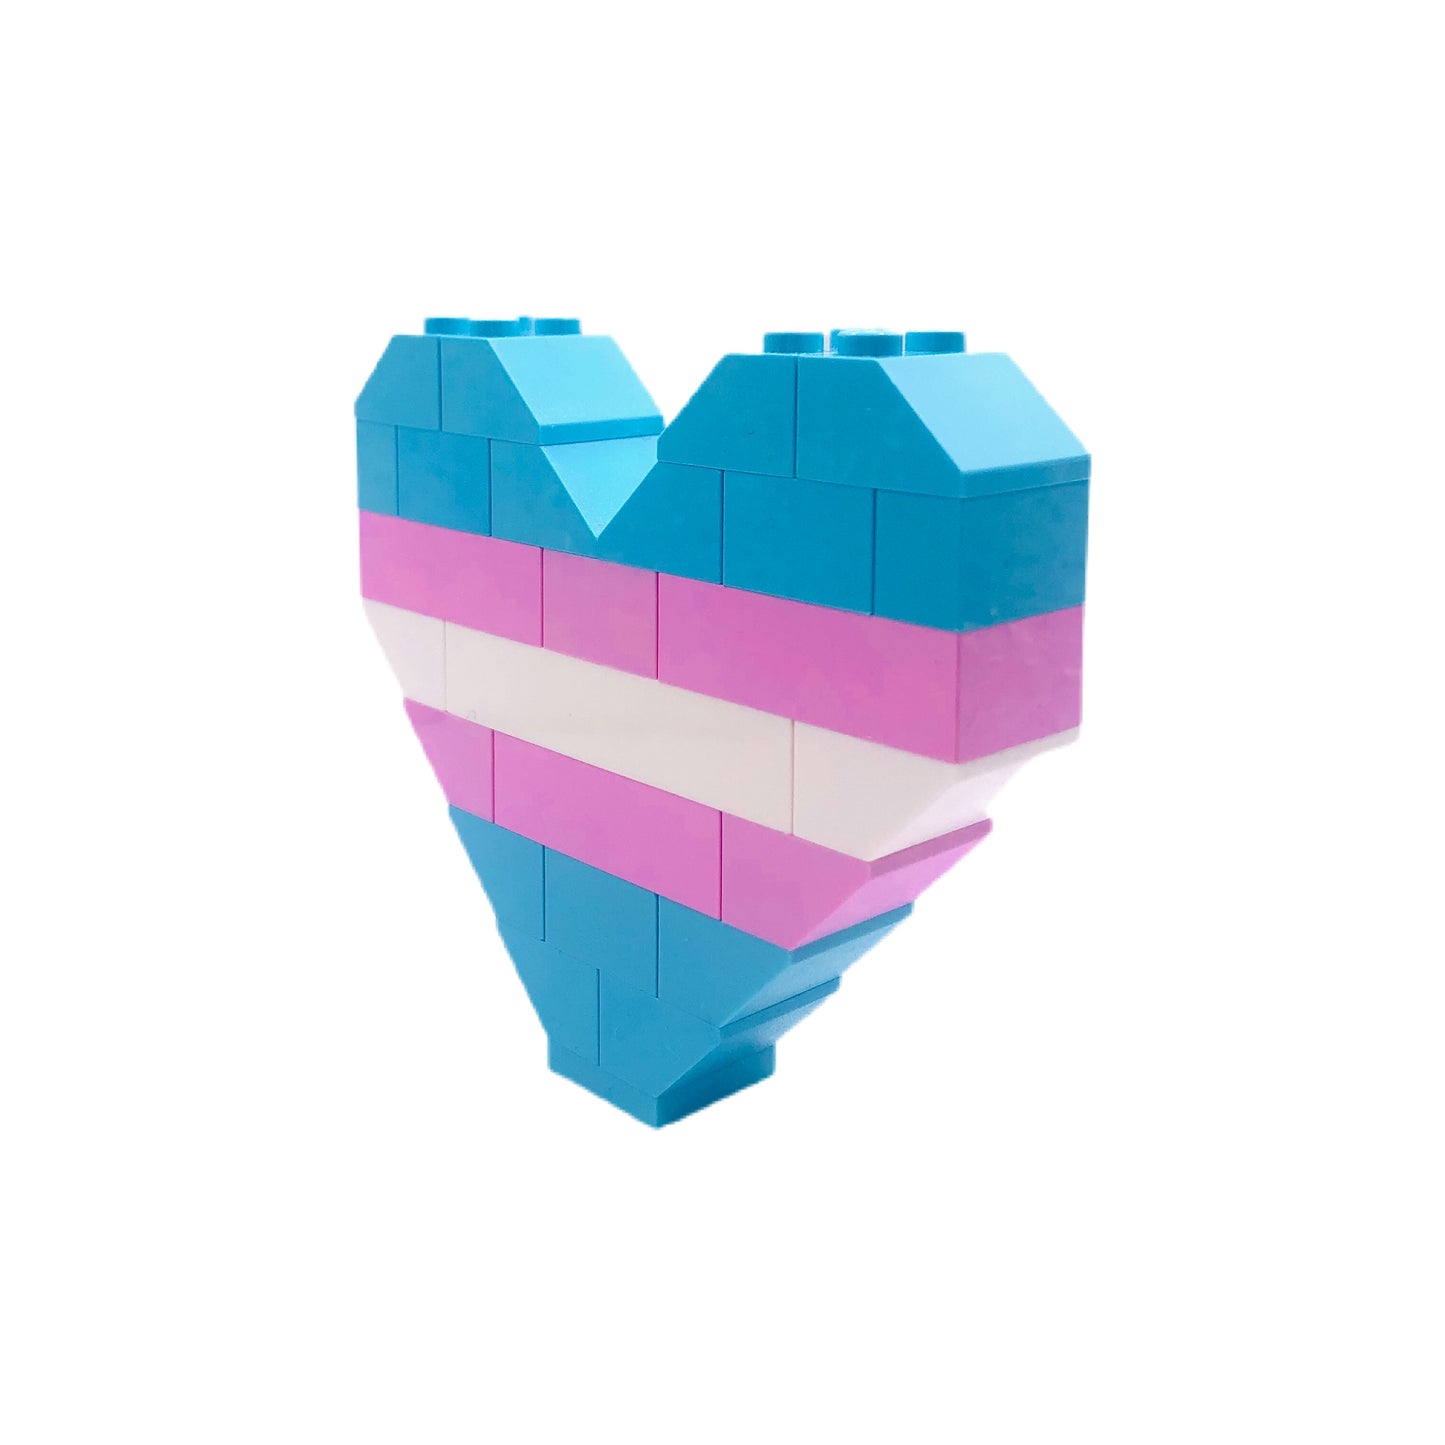 BrickNetty Pride Heart - Trans*